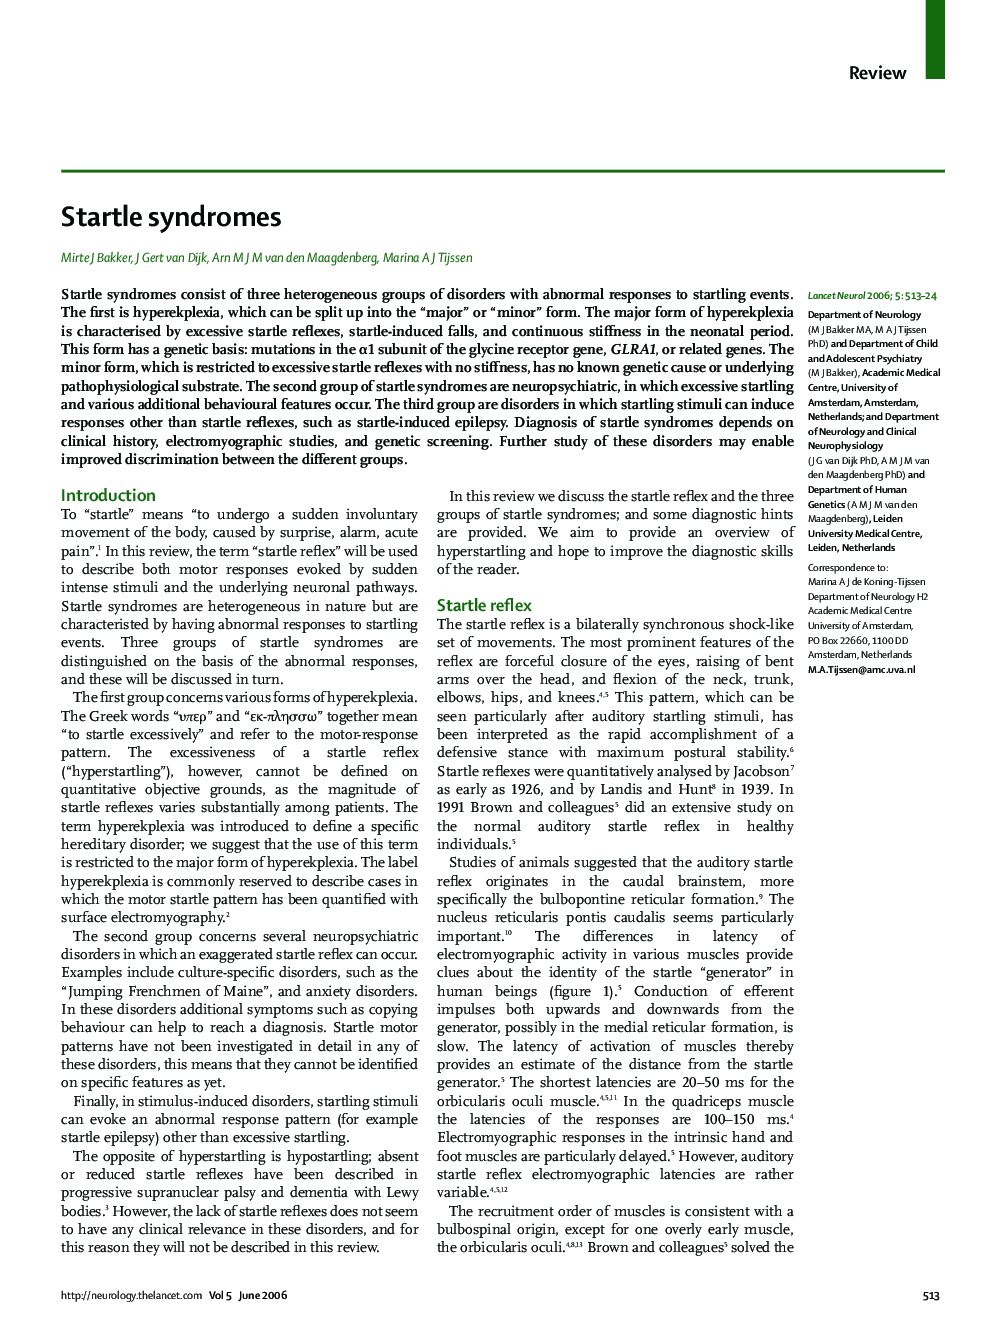 Startle syndromes